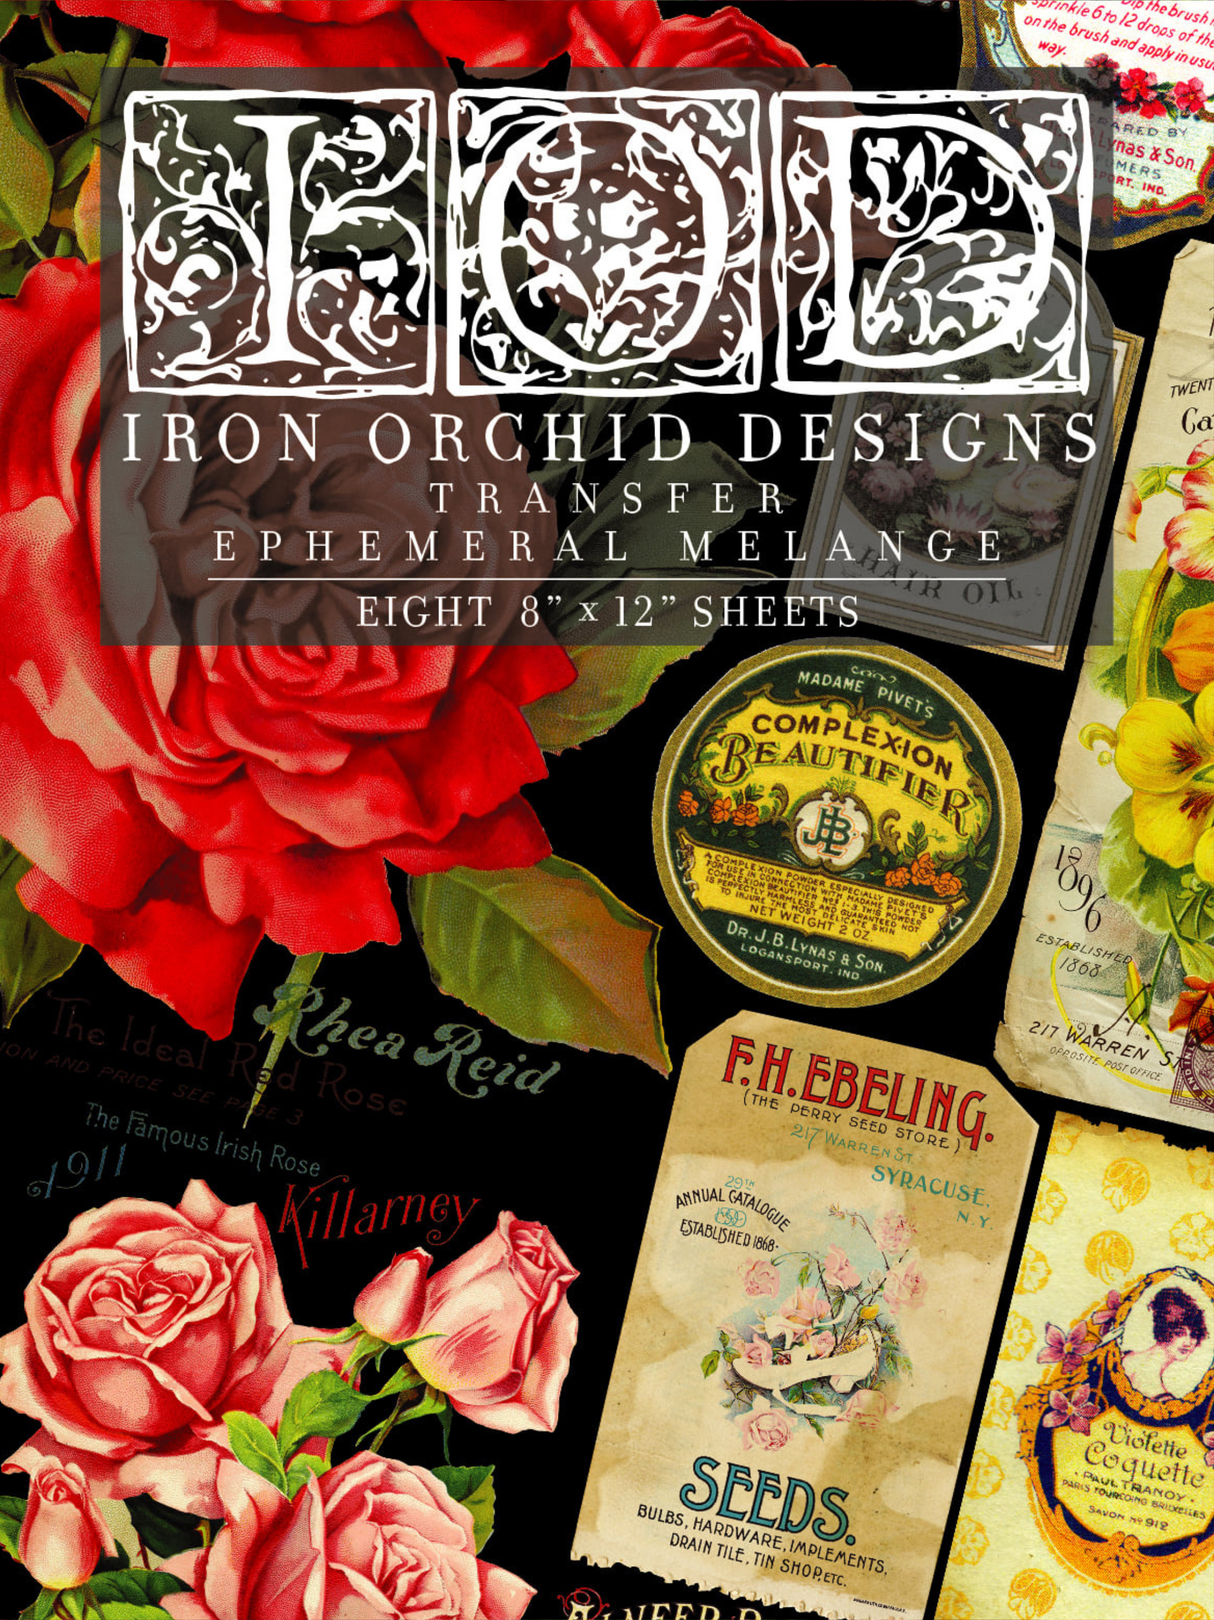 Ephemeral Melange Transfer by IOD - Iron Orchid Designs